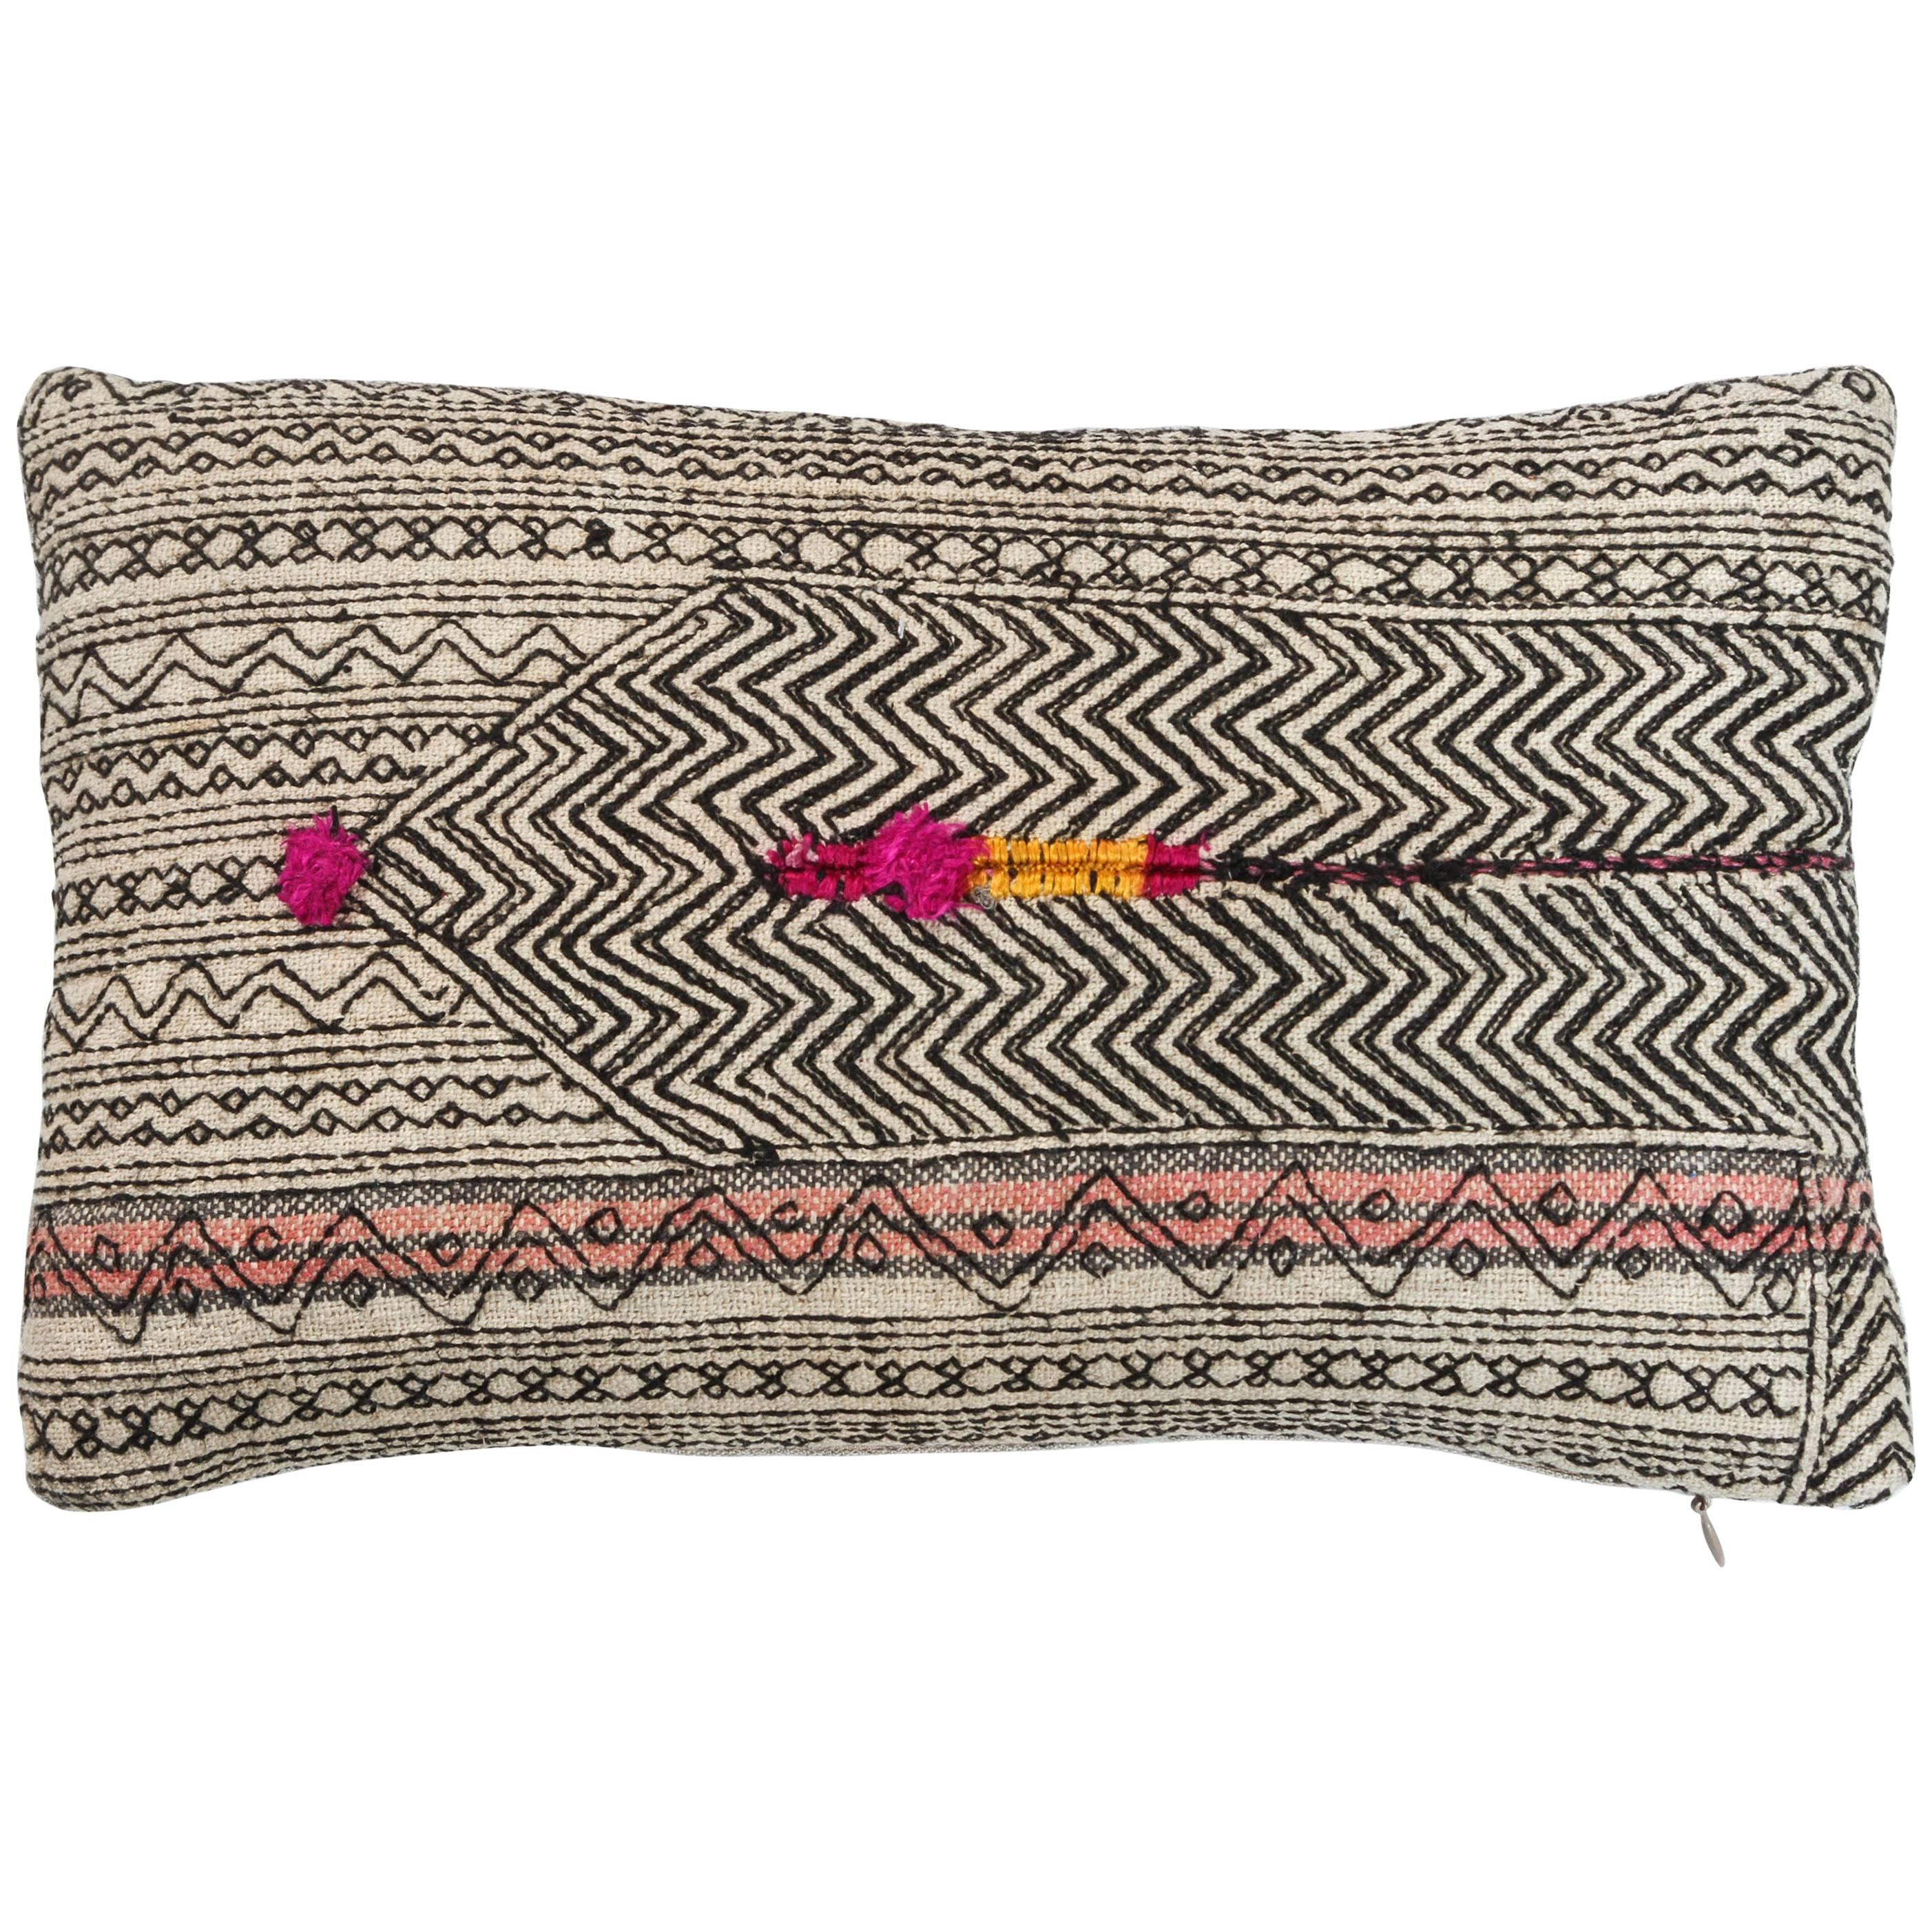 Afghani Nuristan Lumbar Pillow. Black, Ivory, Pink, Fuchia and Gold.  For Sale